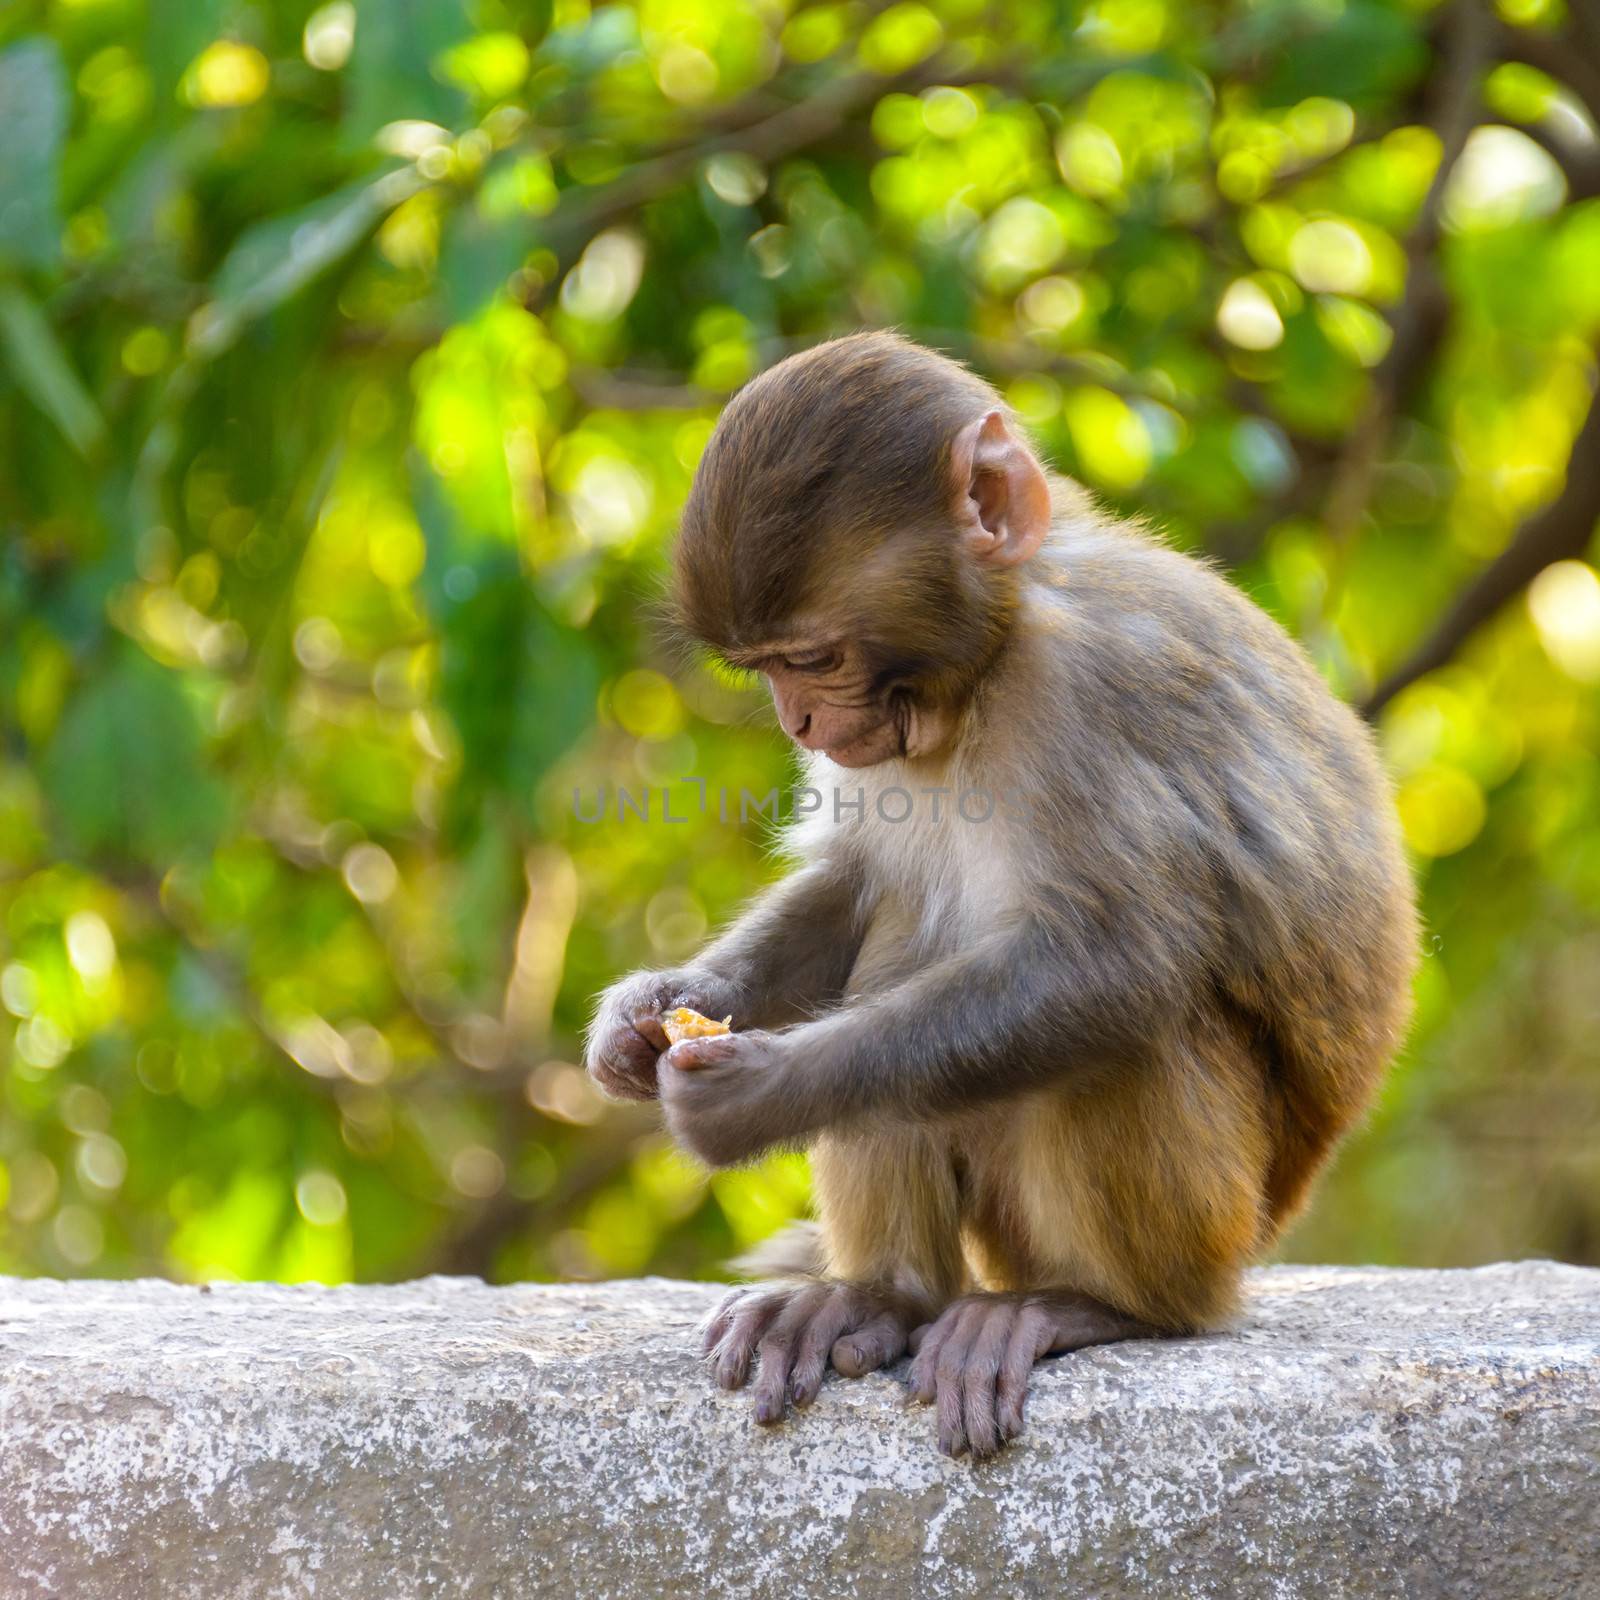 A baby macaque eating an orange in Swayambhunath, Kathmandu, Nepal